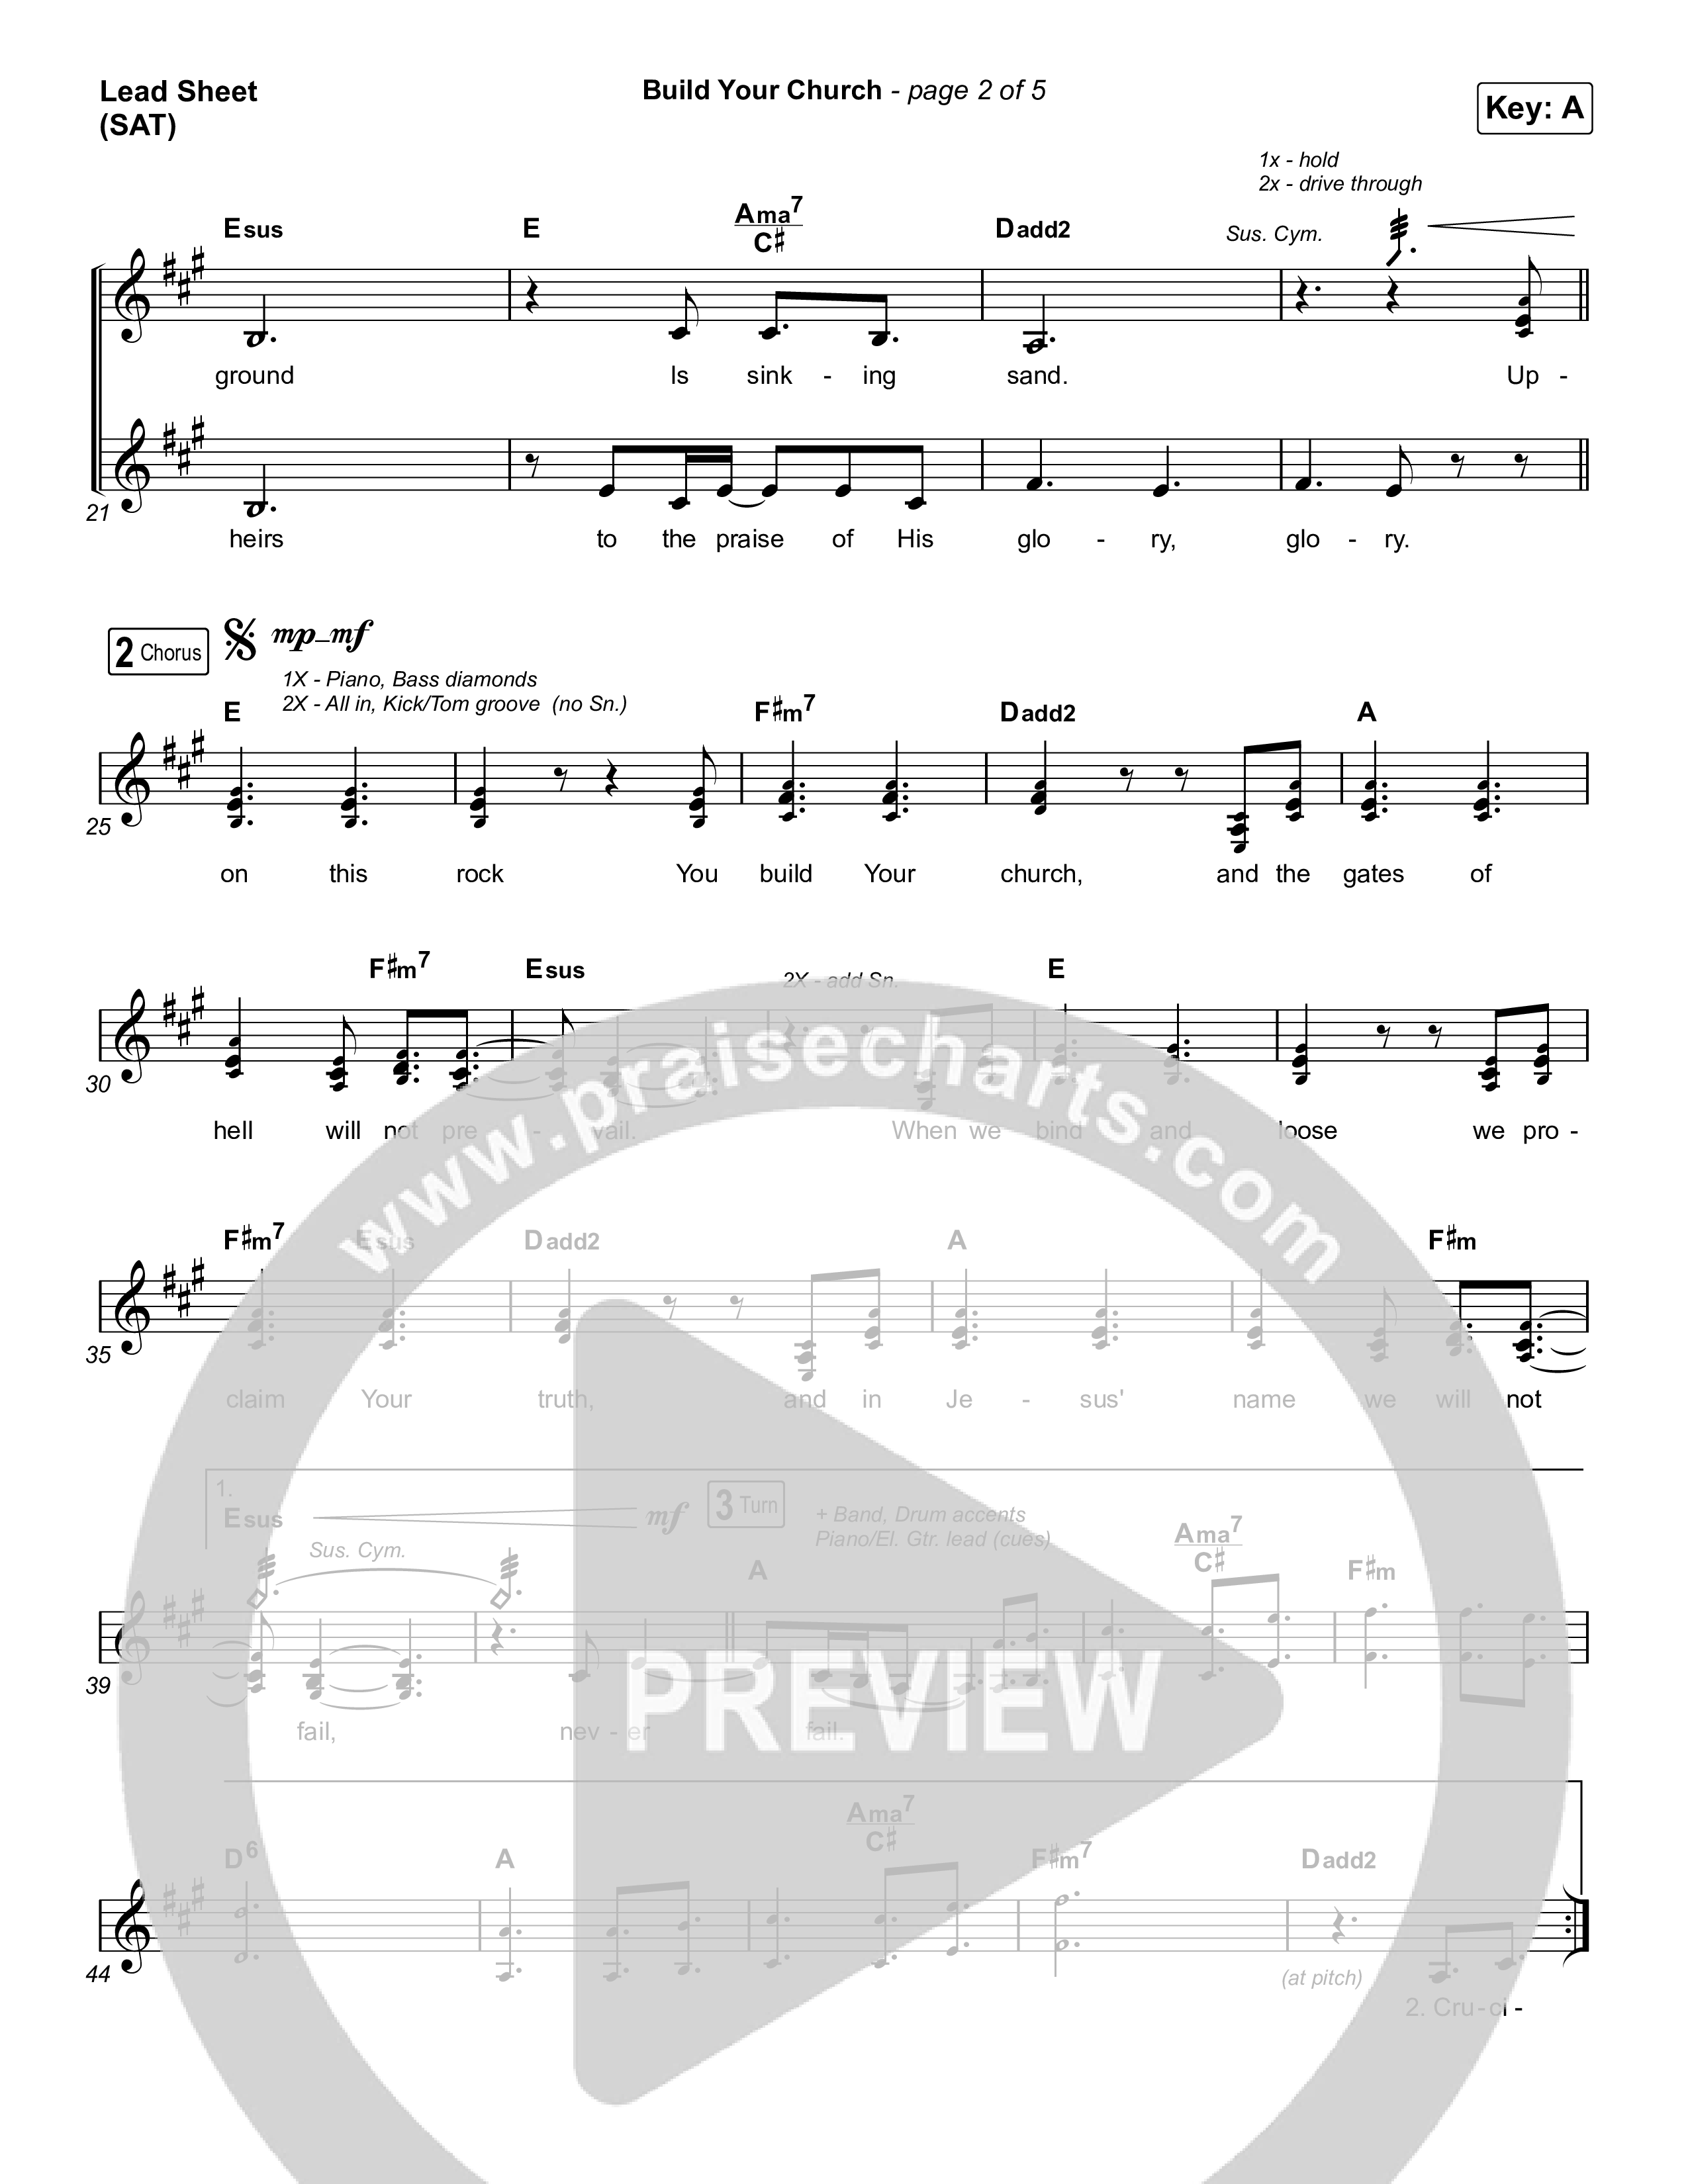 Build Your Church (Choral Anthem SATB) Lead Sheet (SAT) (Maverick City Music / Elevation Worship / Arr. Luke Gambill)